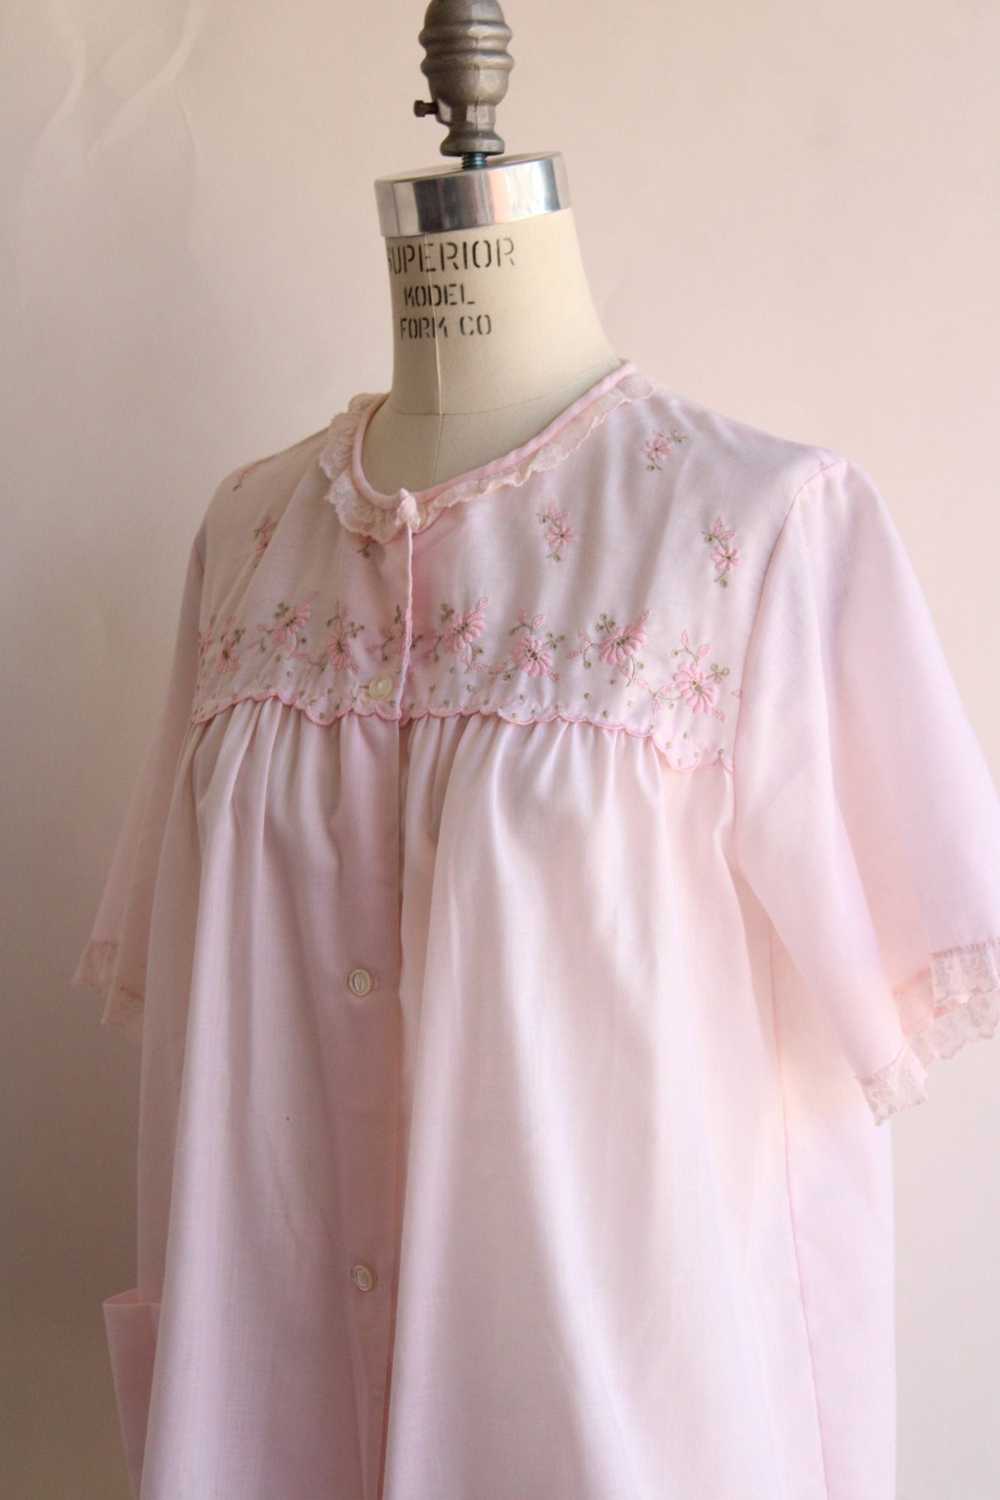 Vintage 1970s Sears Pink Floral Embroidered PJ Top - image 6